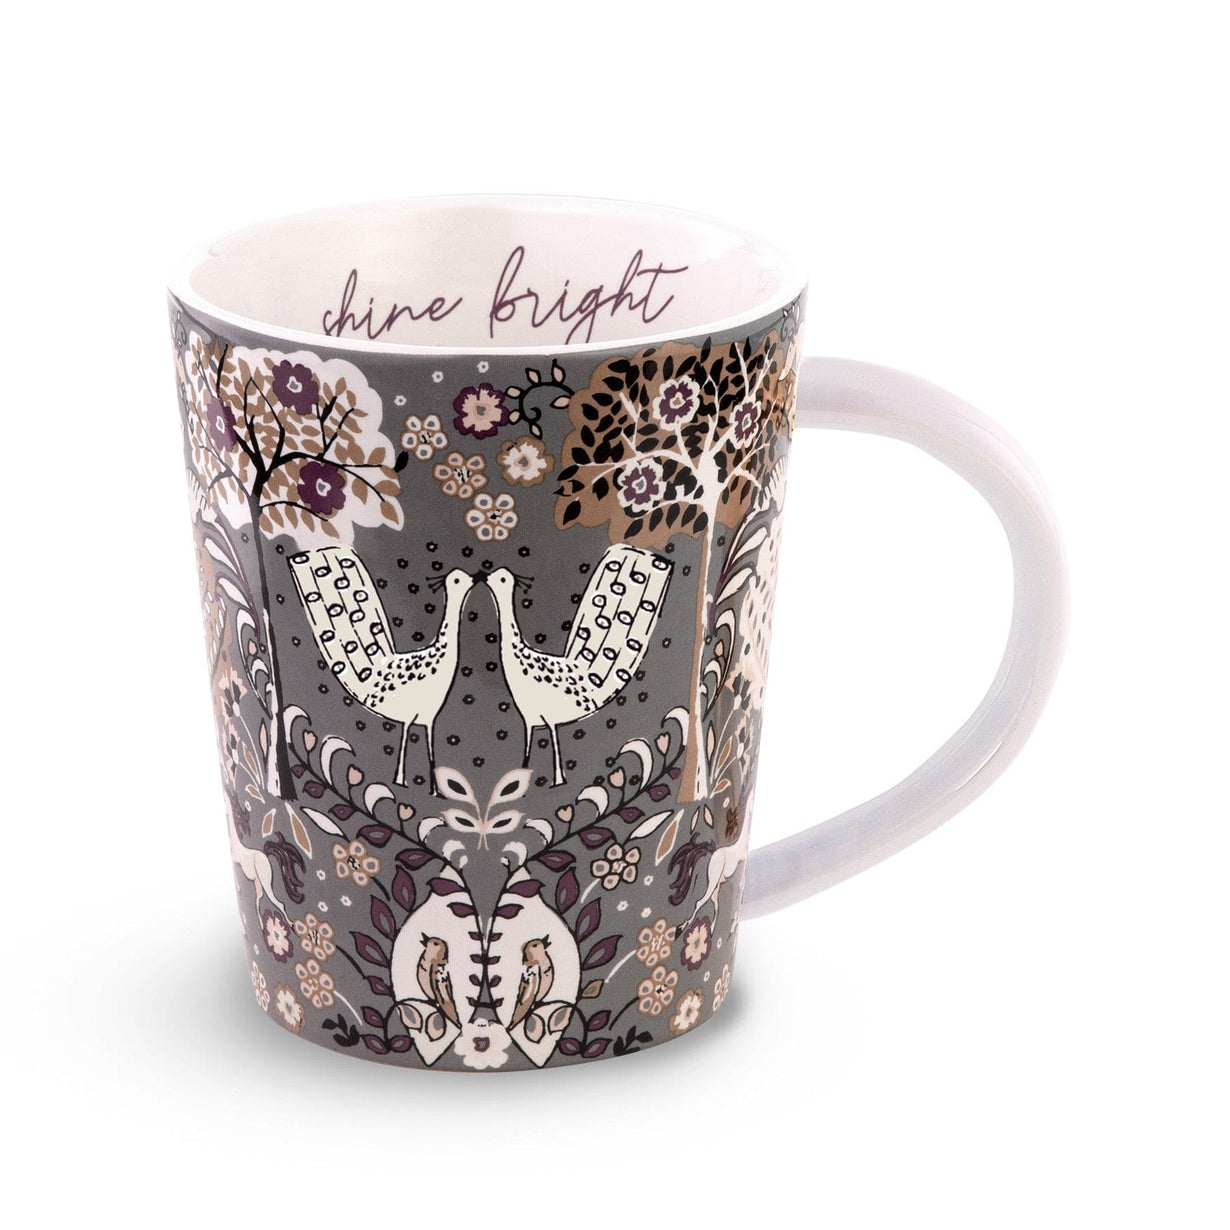 Large ceramic mug with exclusive vera bradley pattern